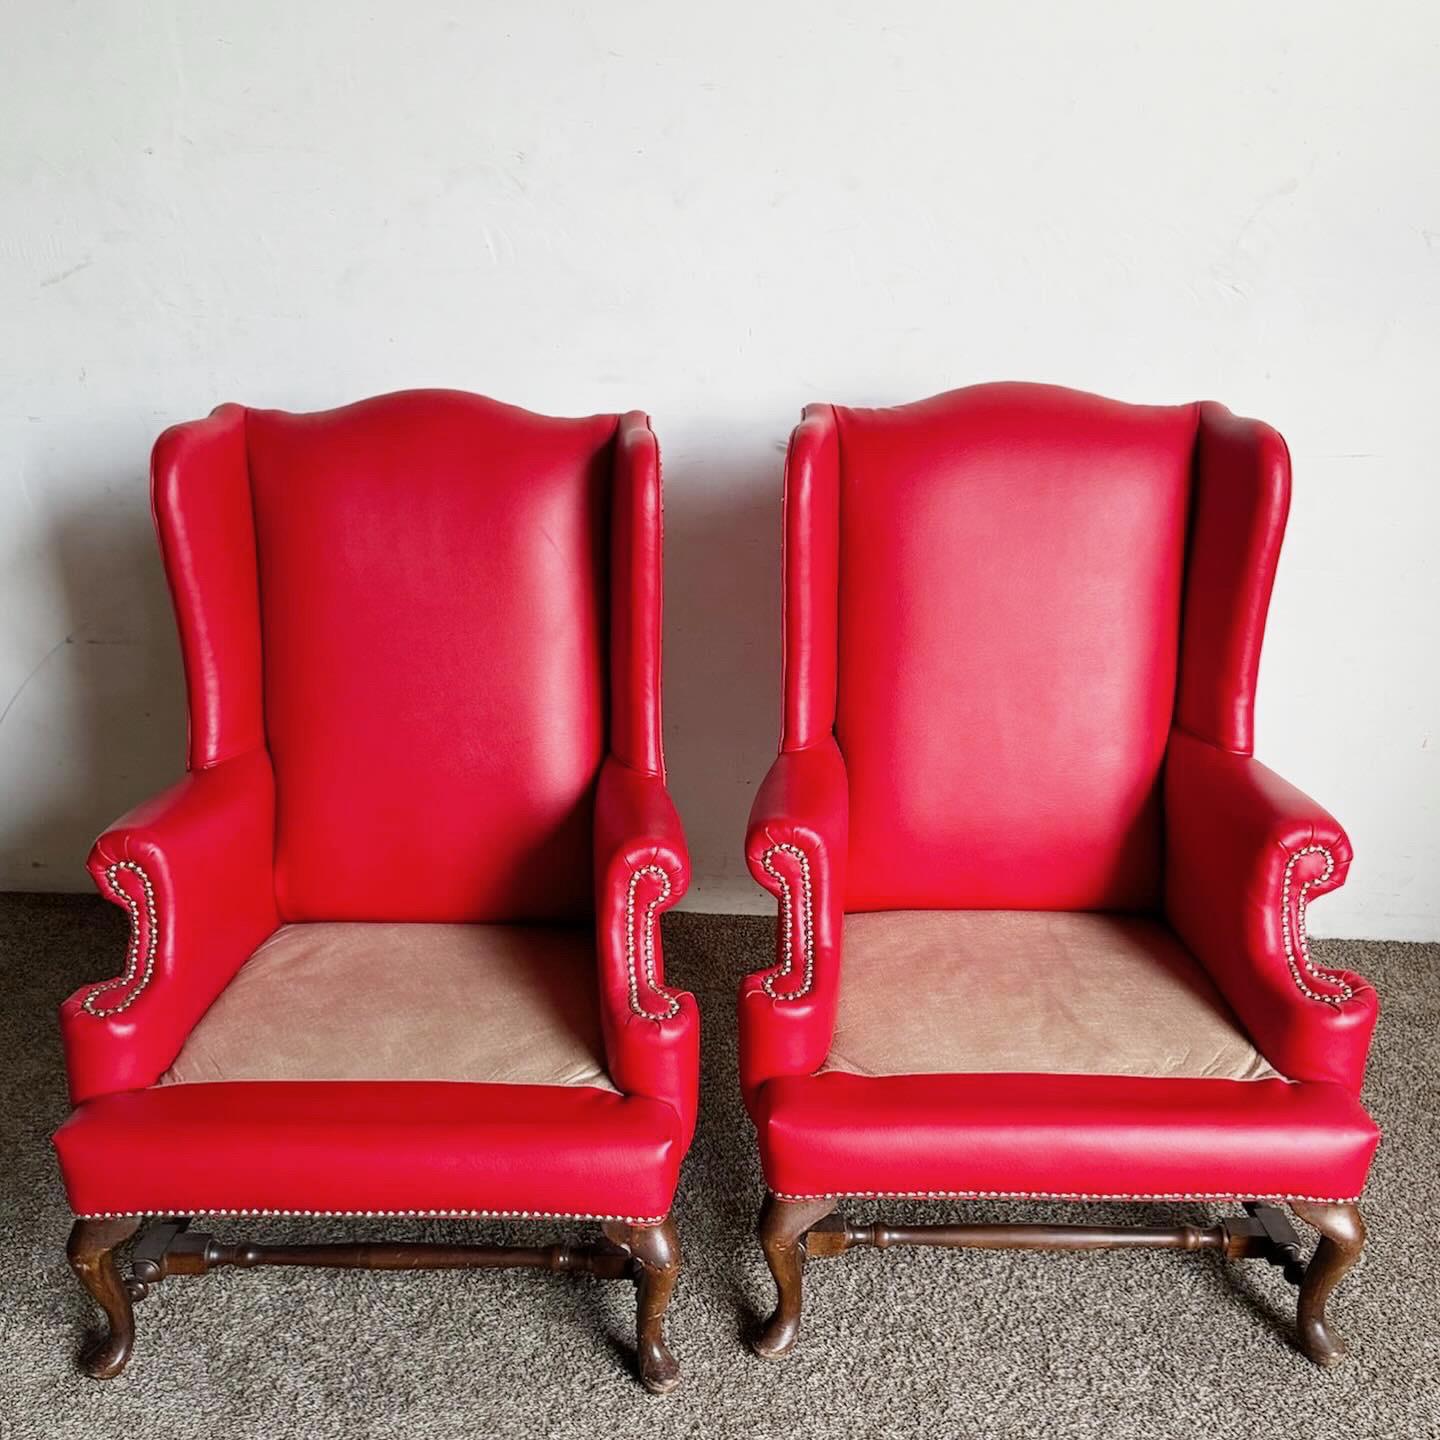 Traditionelle rote Kunstleder-Lehnstühle - ein Paar (Regency) im Angebot